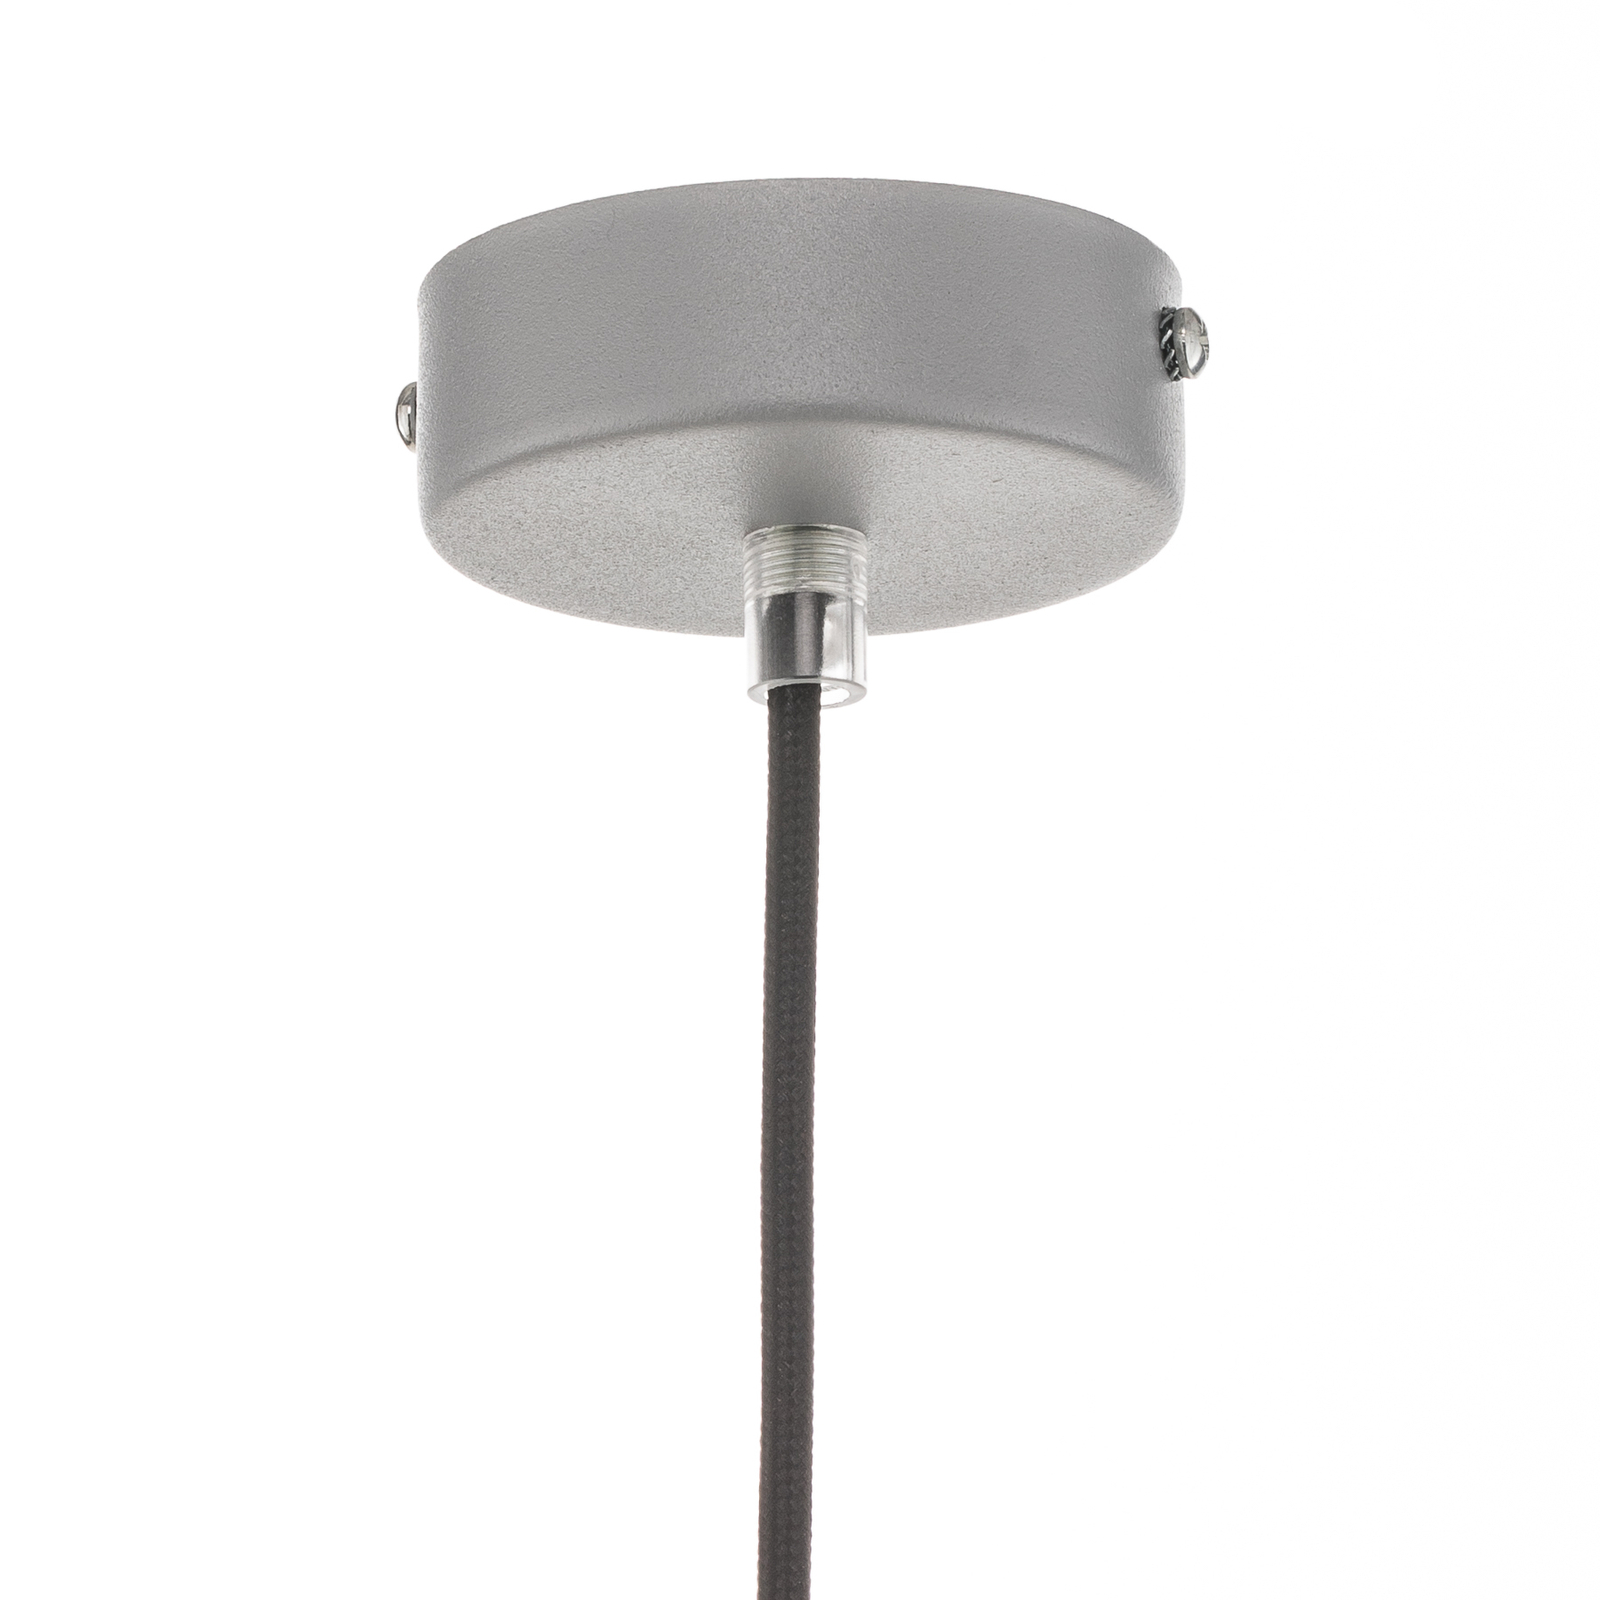 Hanglamp Cona van beton, Ø 28 cm